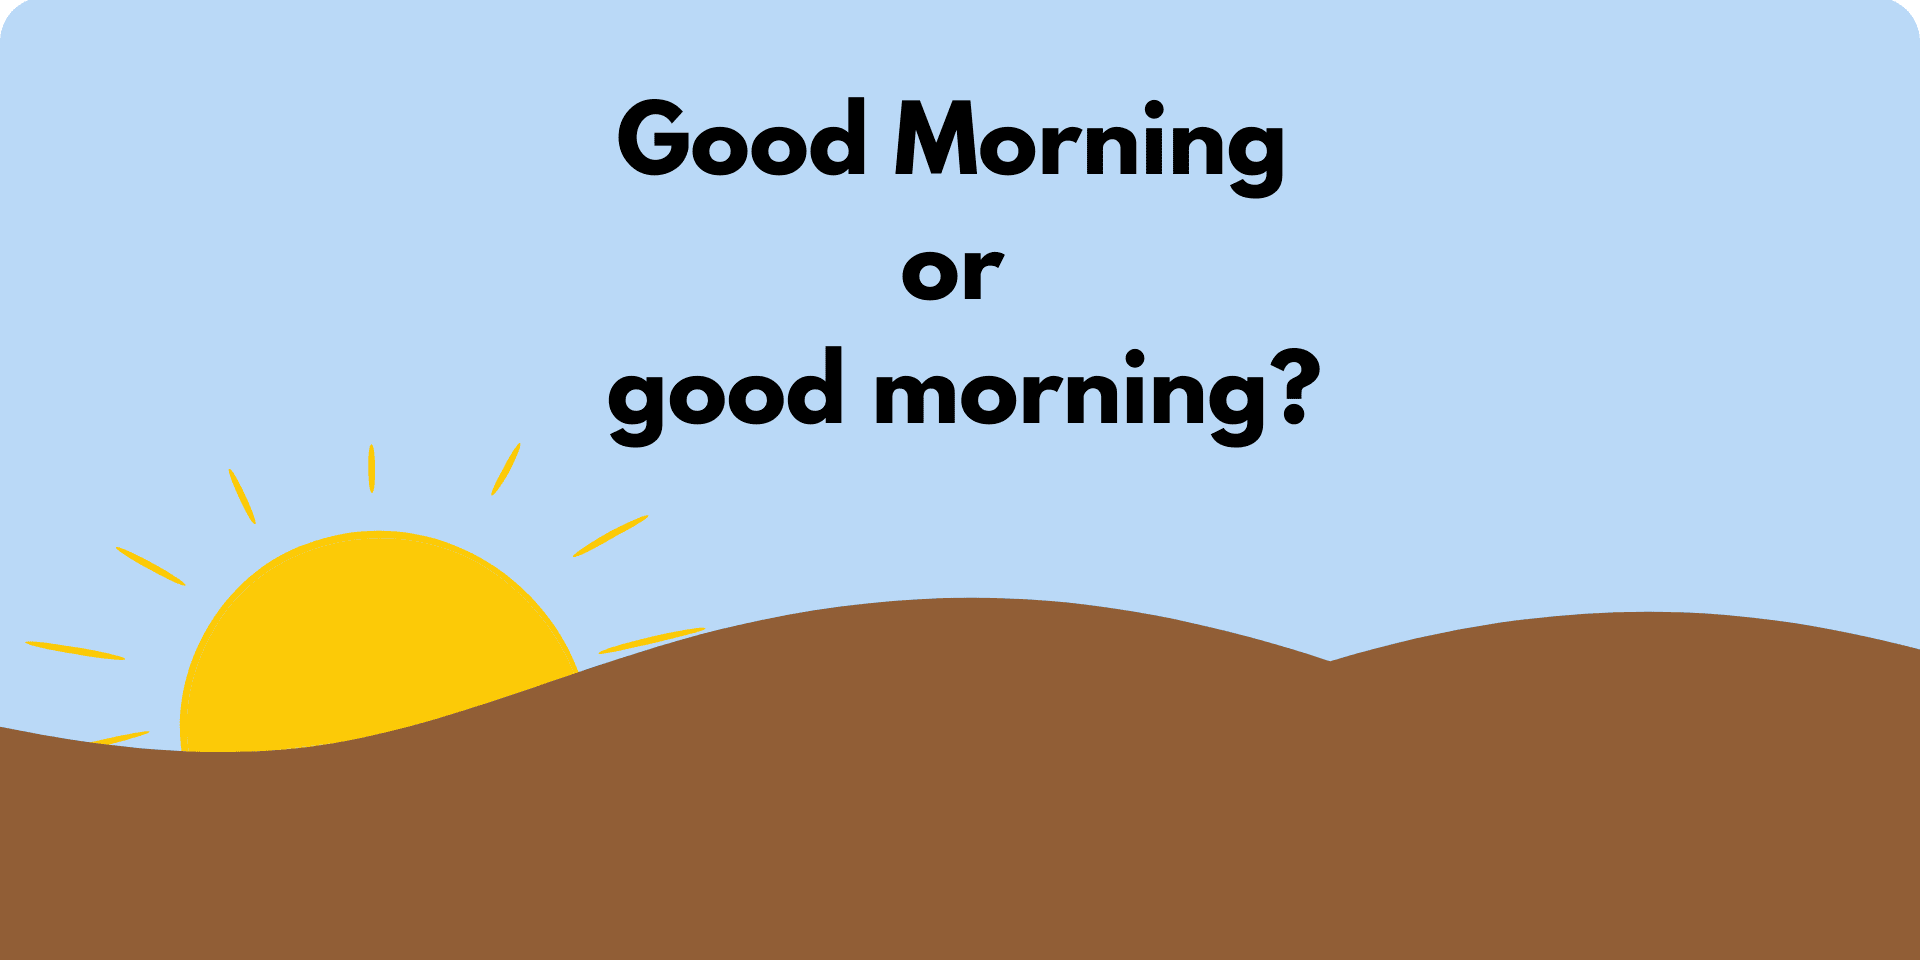 Good Morning or good morning?